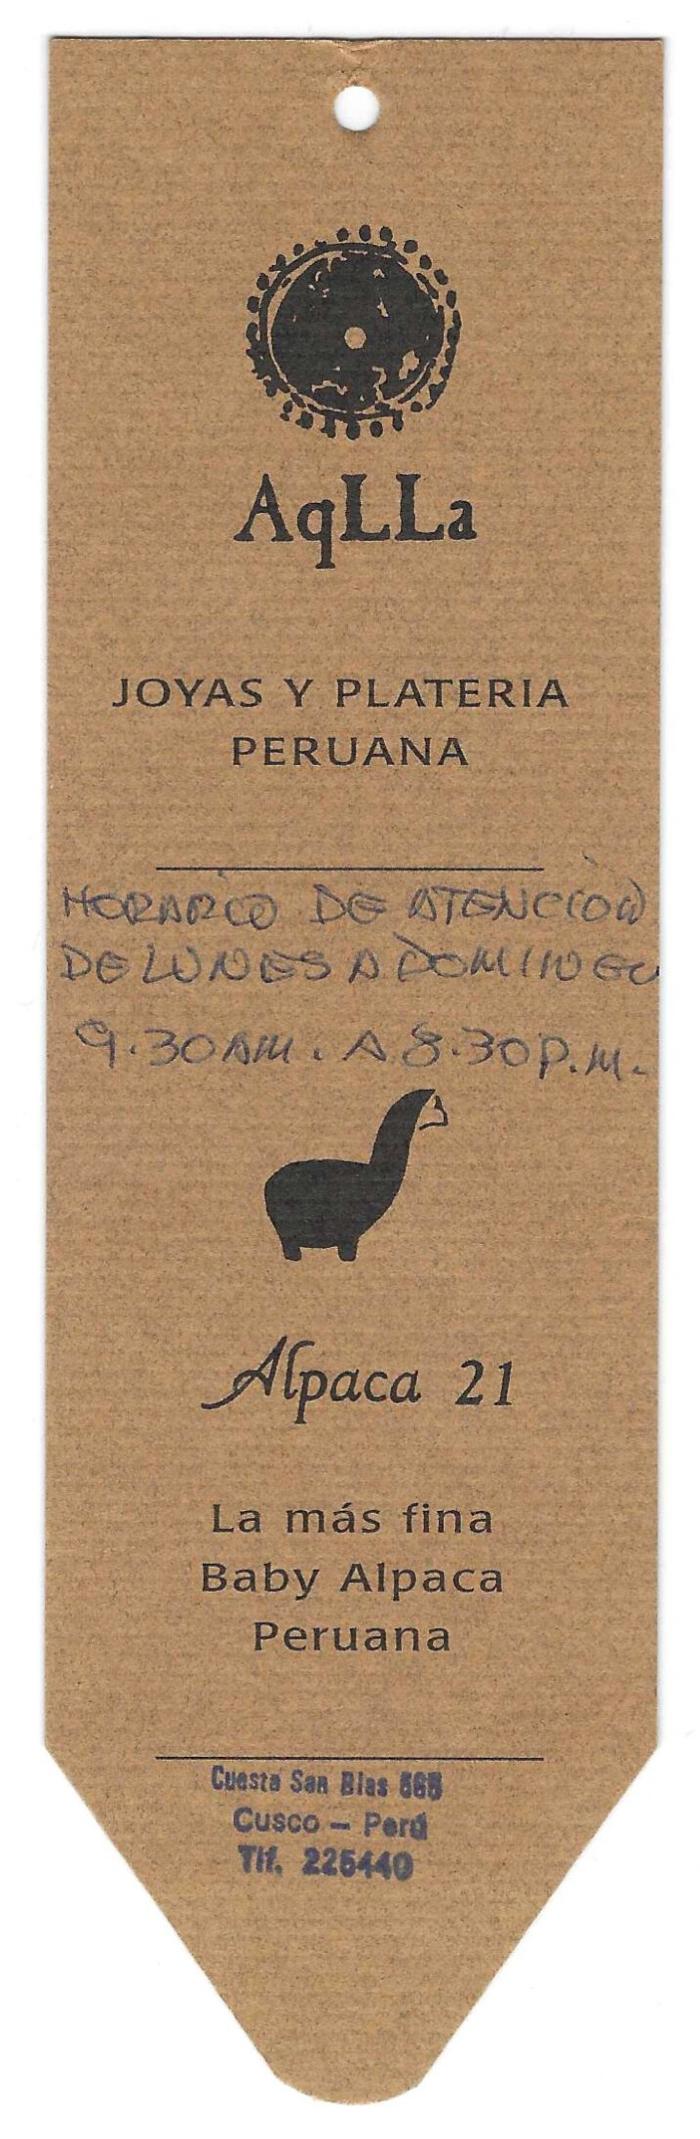 Bladwijzer uit Peru